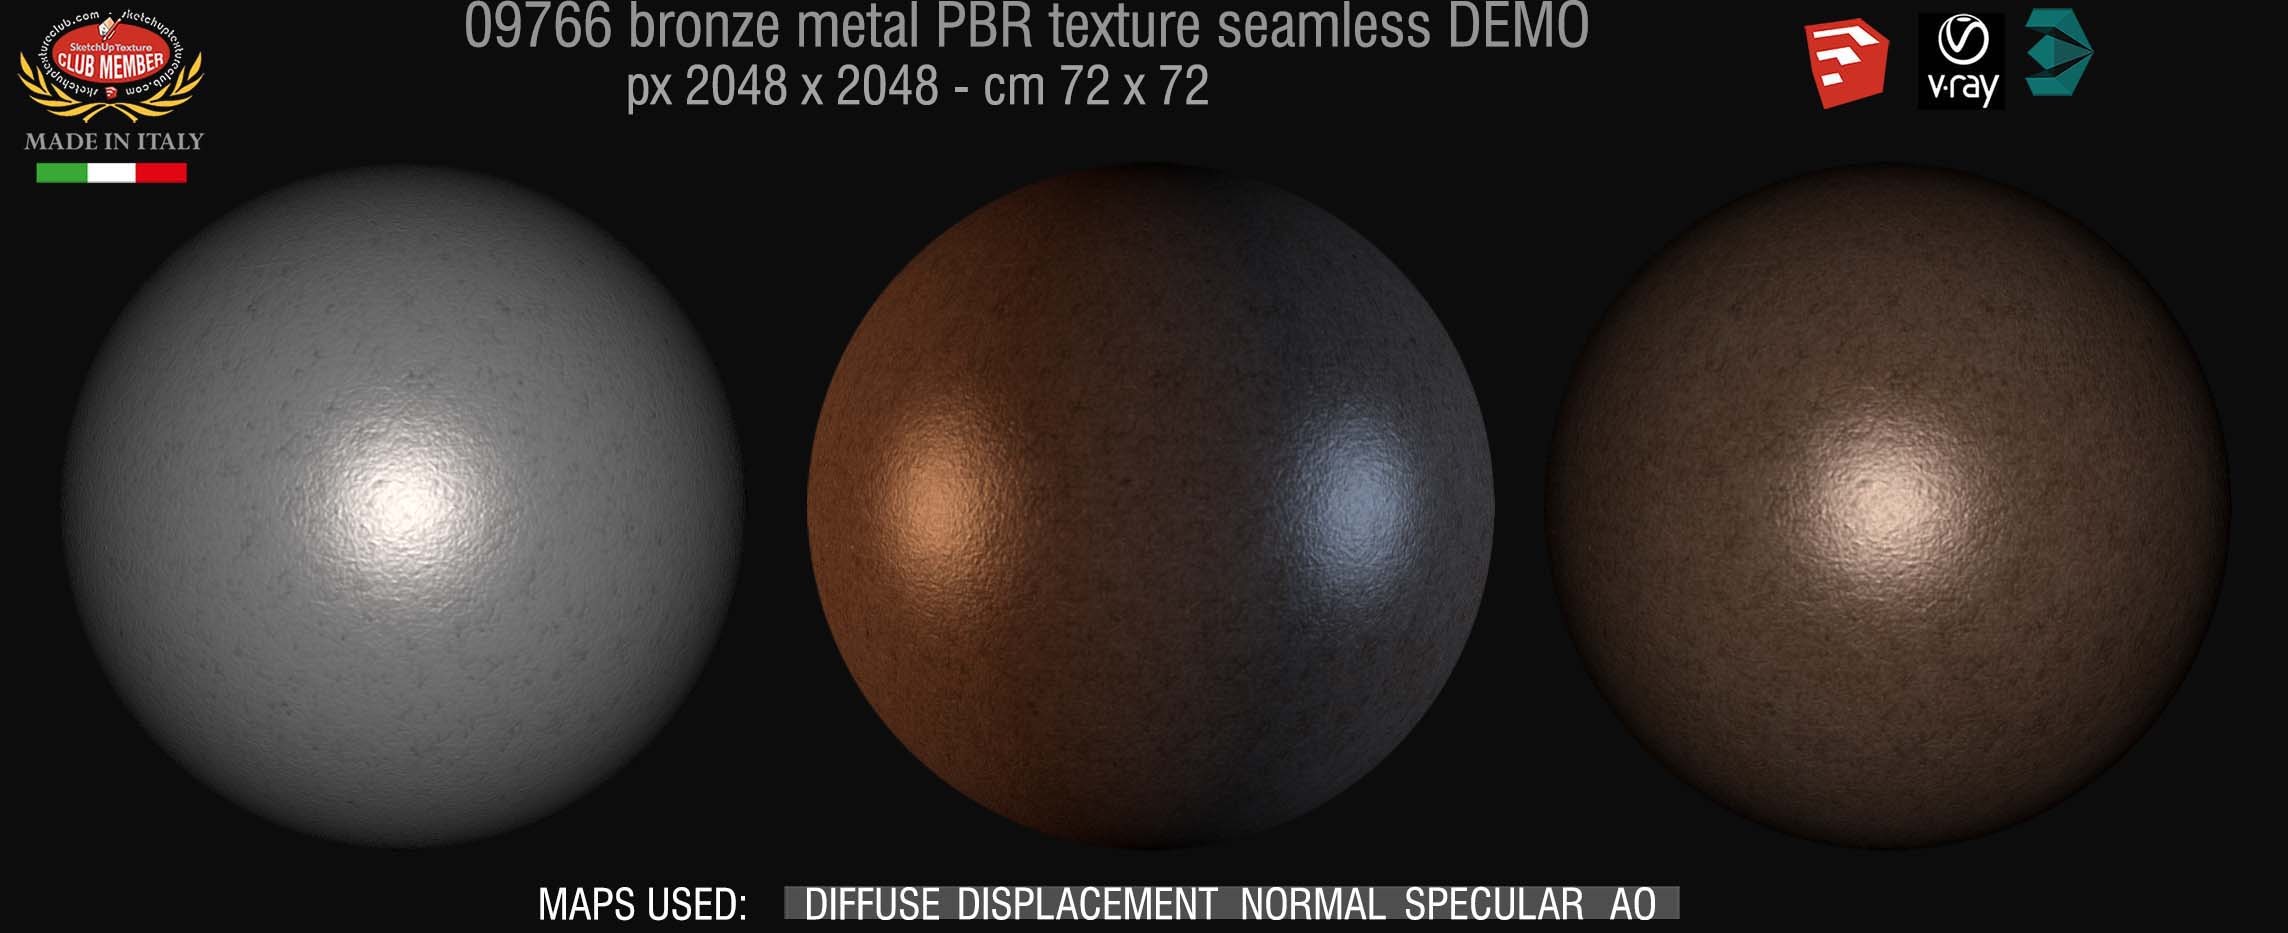 09766 Bronze metal PBR texture seamless DEMO